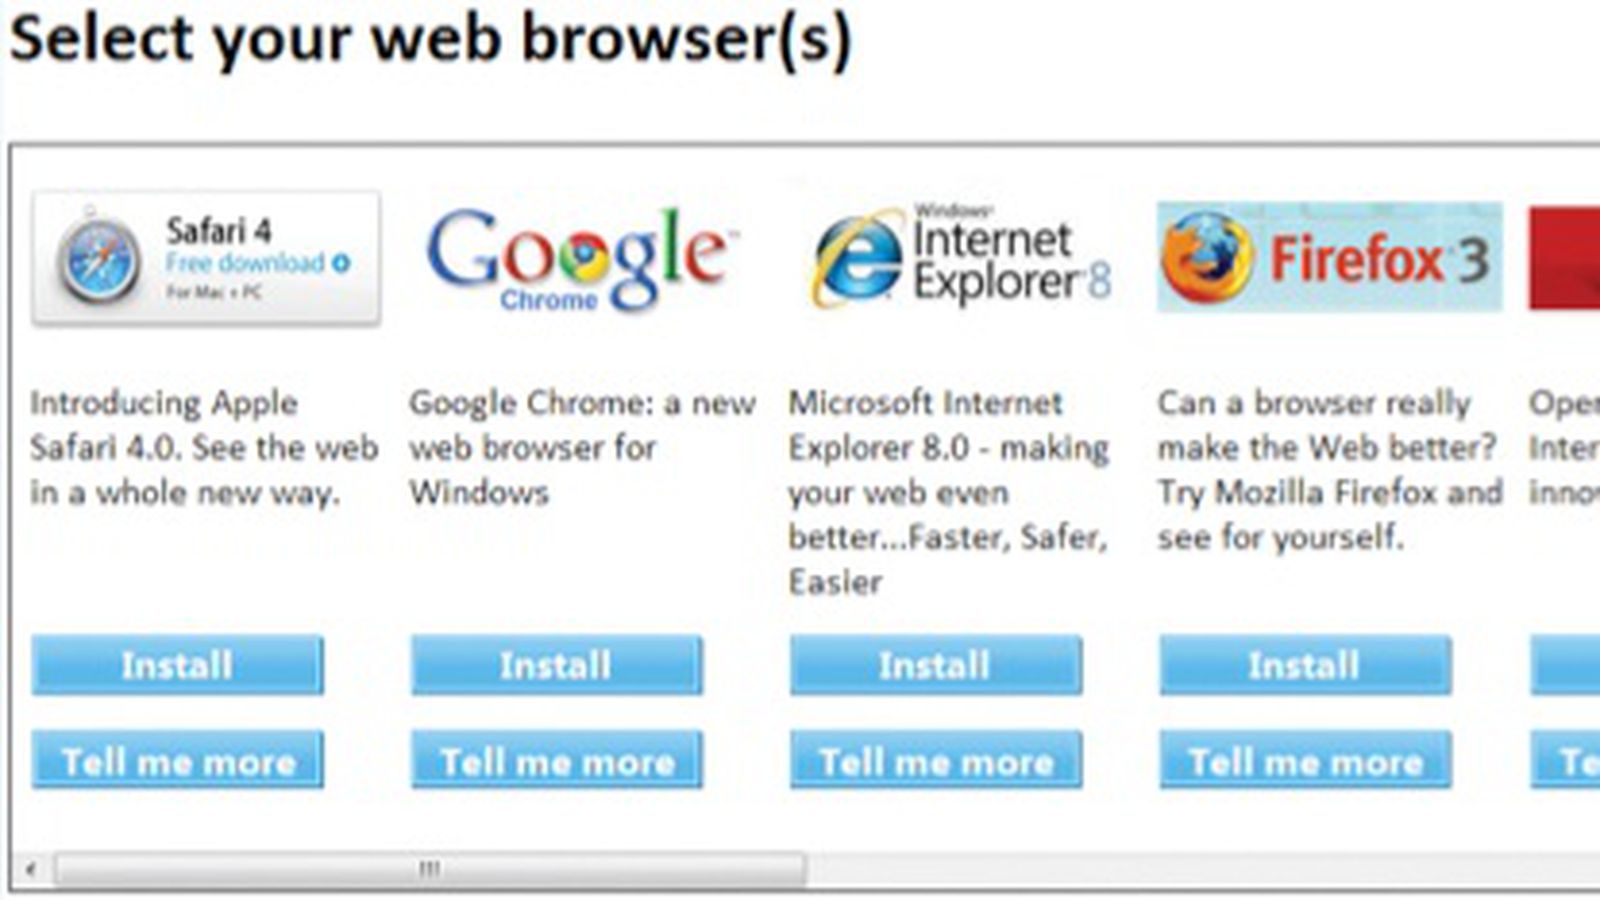 download latest internet explorer for windows 8 free